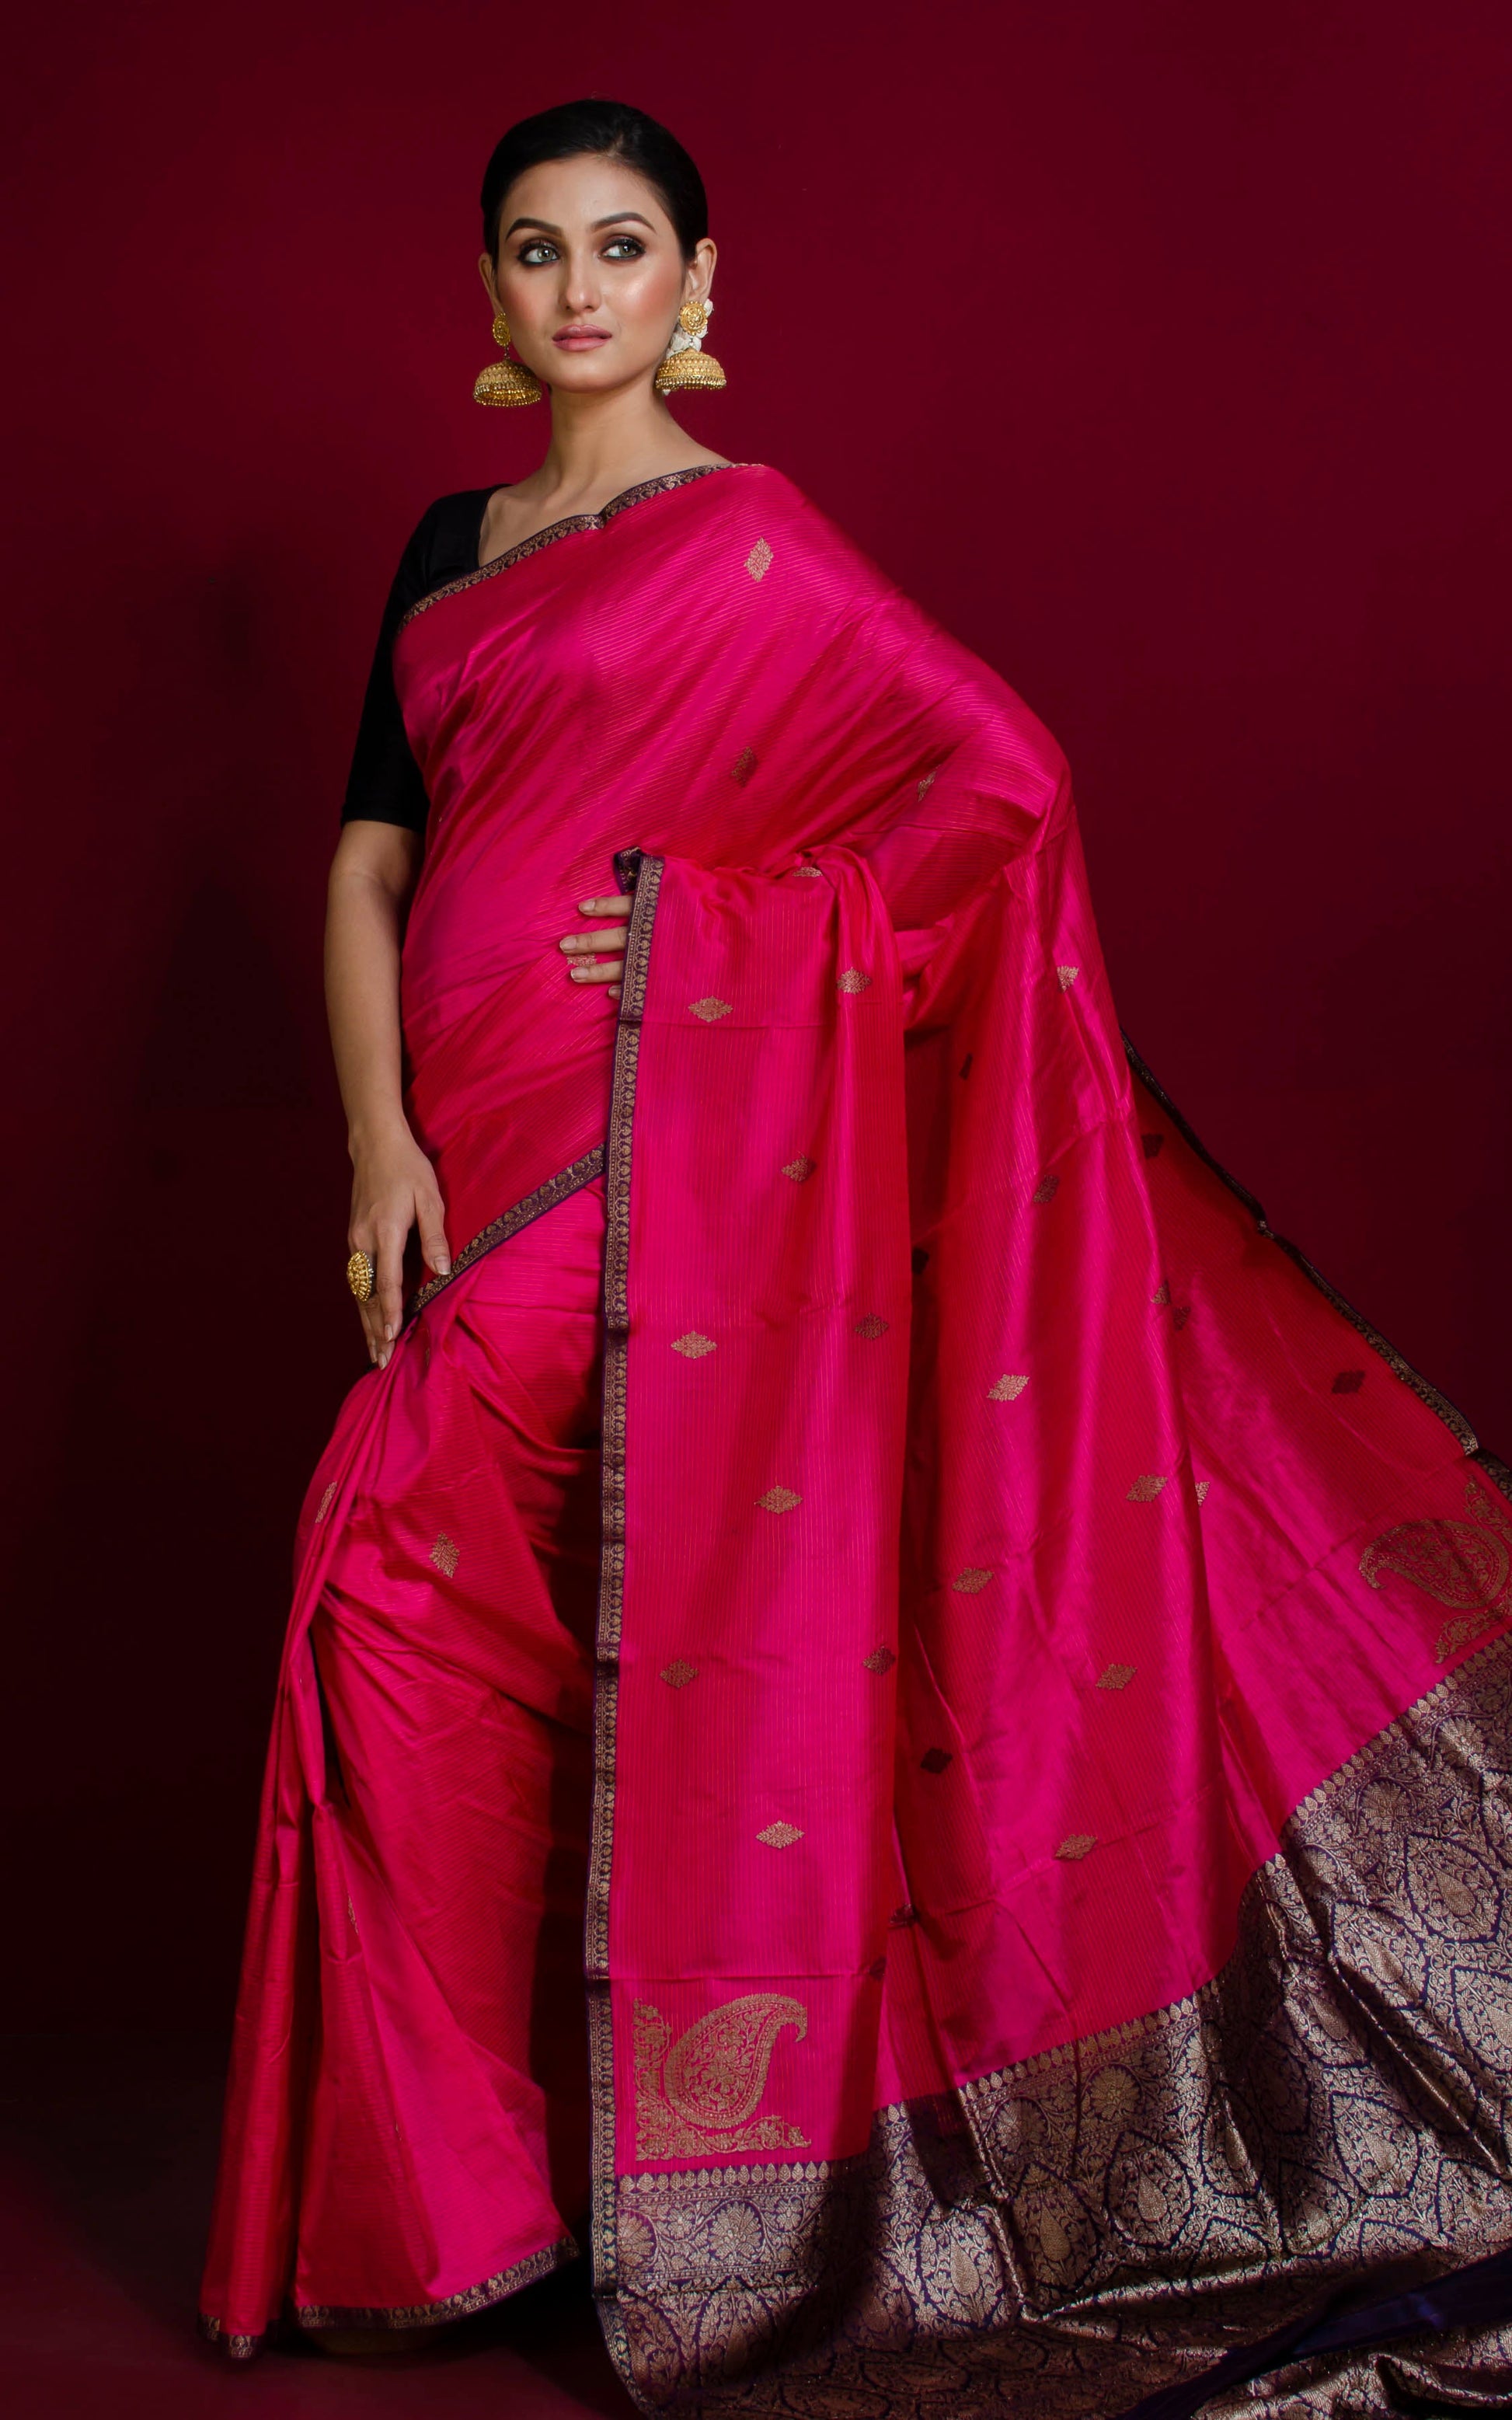 Woven Thread Nakshi Work Koniya Motif Pure Katan Banarasi Silk Saree in Deep Pink, Dark Blue and Antique Gold